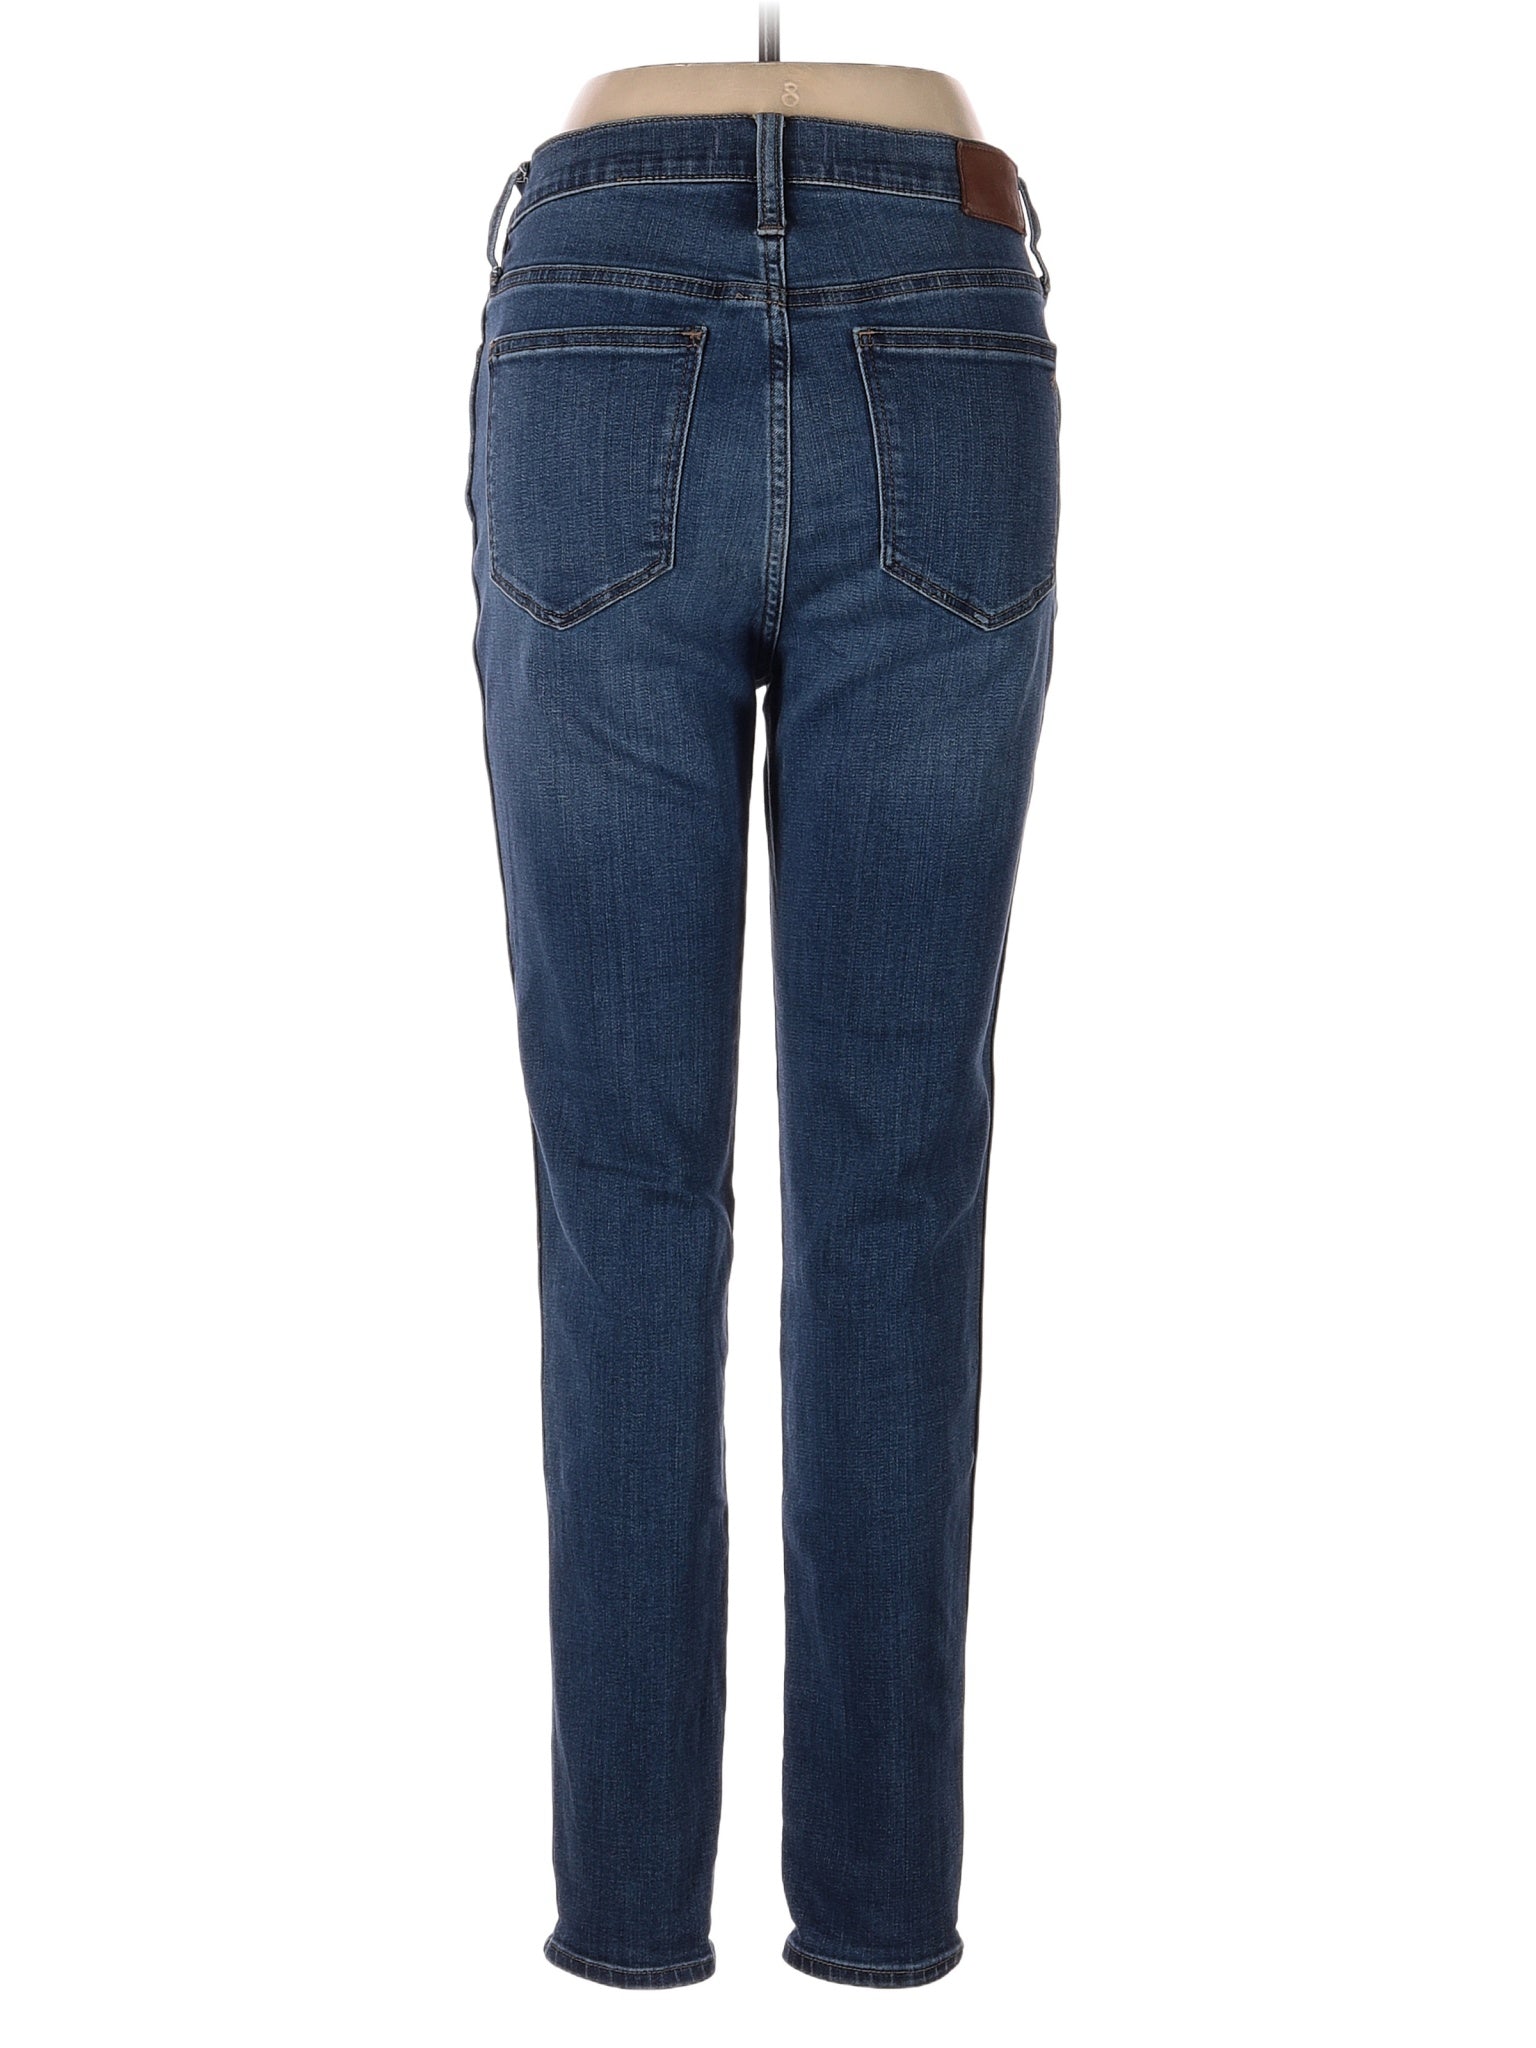 High-Rise Skinny Jeans in Dark Wash waist size - 29